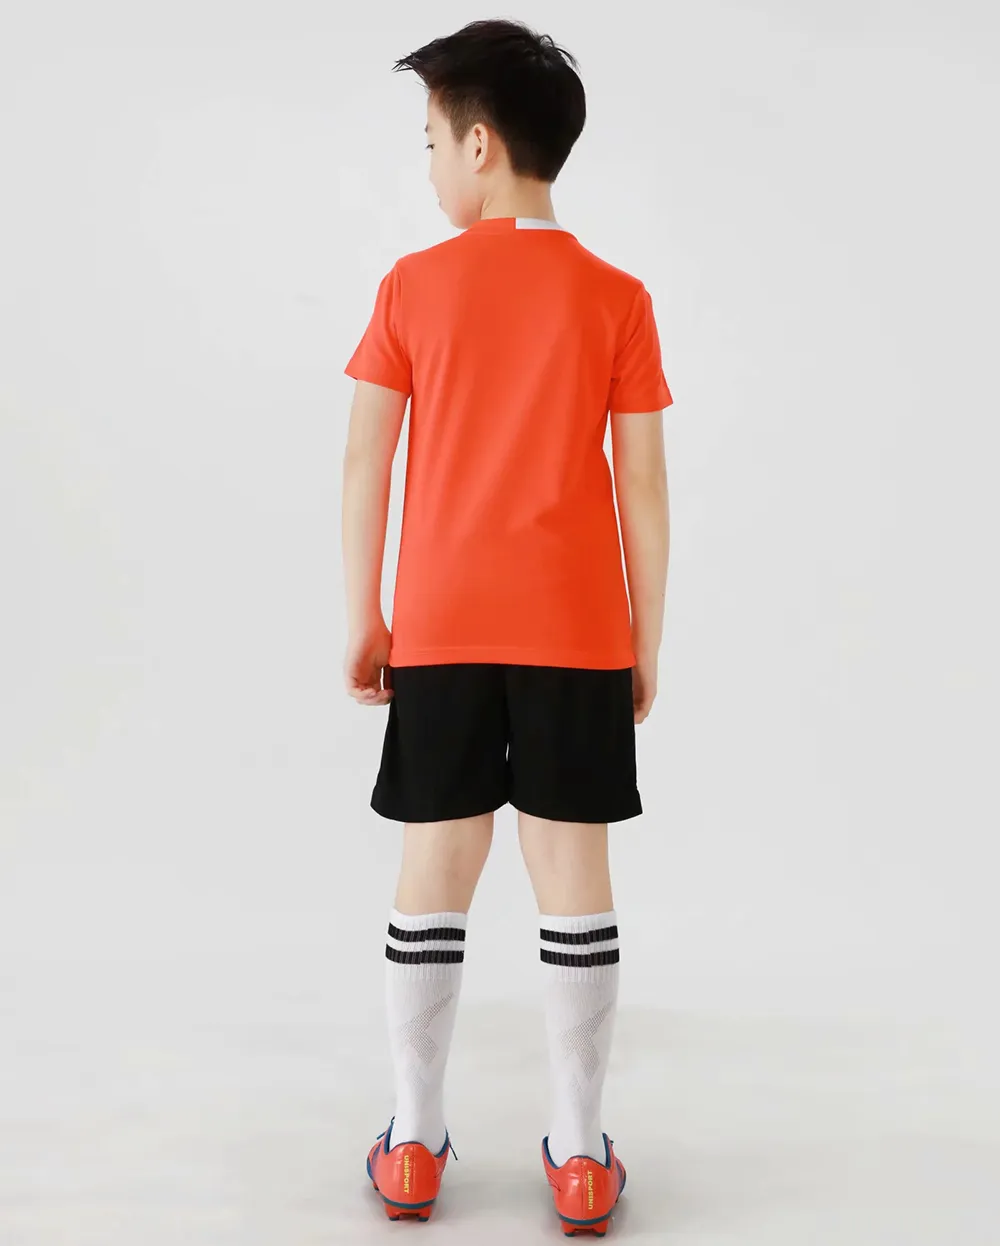 Jessie Kicks #G498 LJR Maglie di moda Aiir Joordan 1 Design 2021 Abbigliamento per bambini Ourtdoor Sport